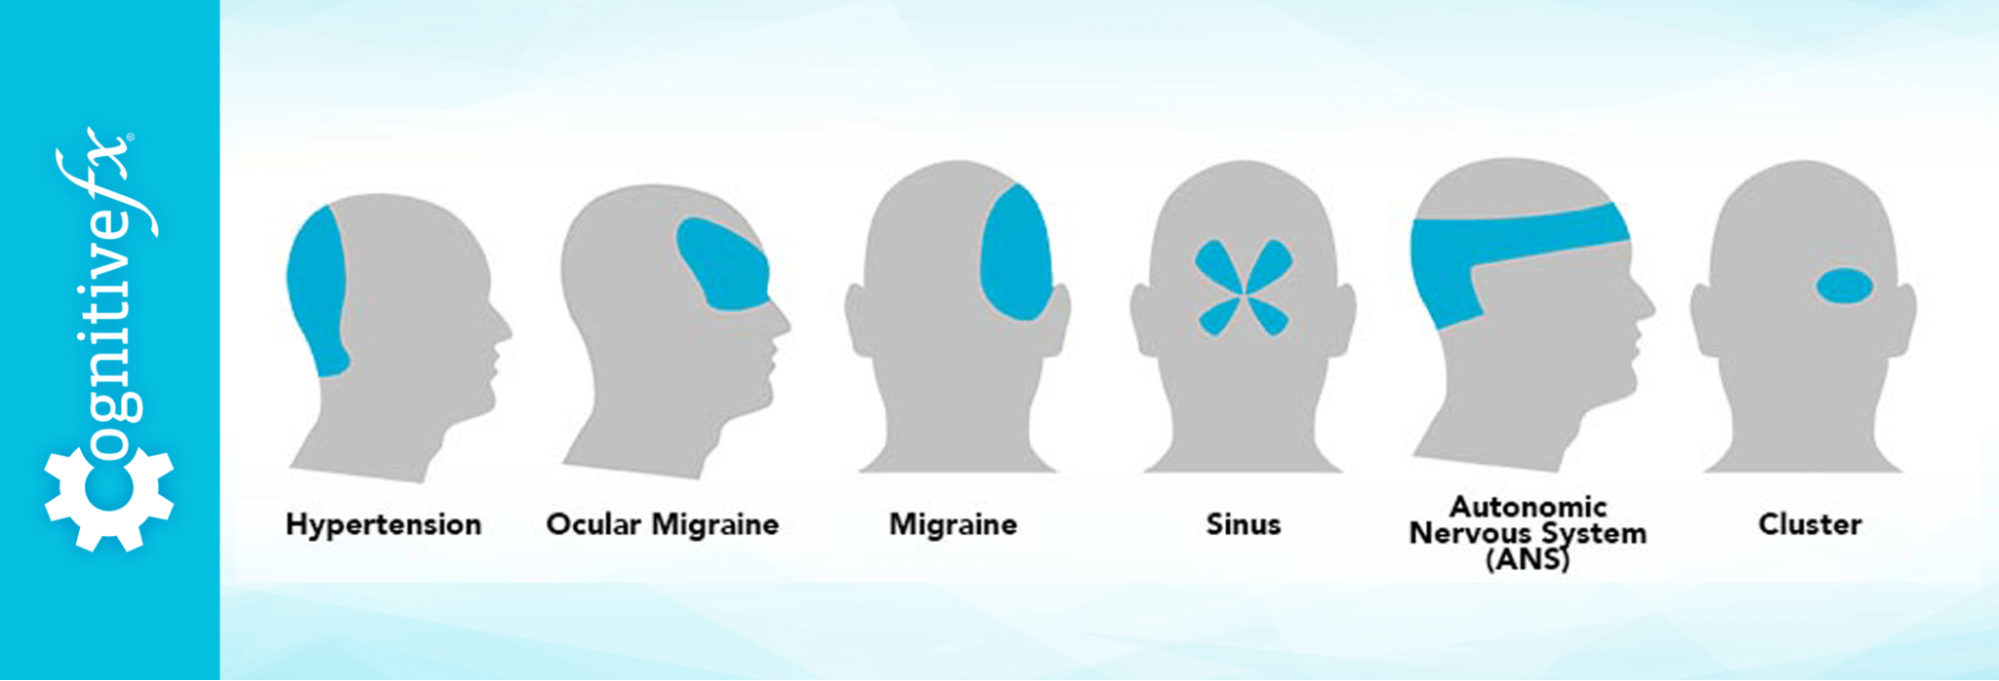 Hypertension, ocular migraine, migraine, sinus, and more